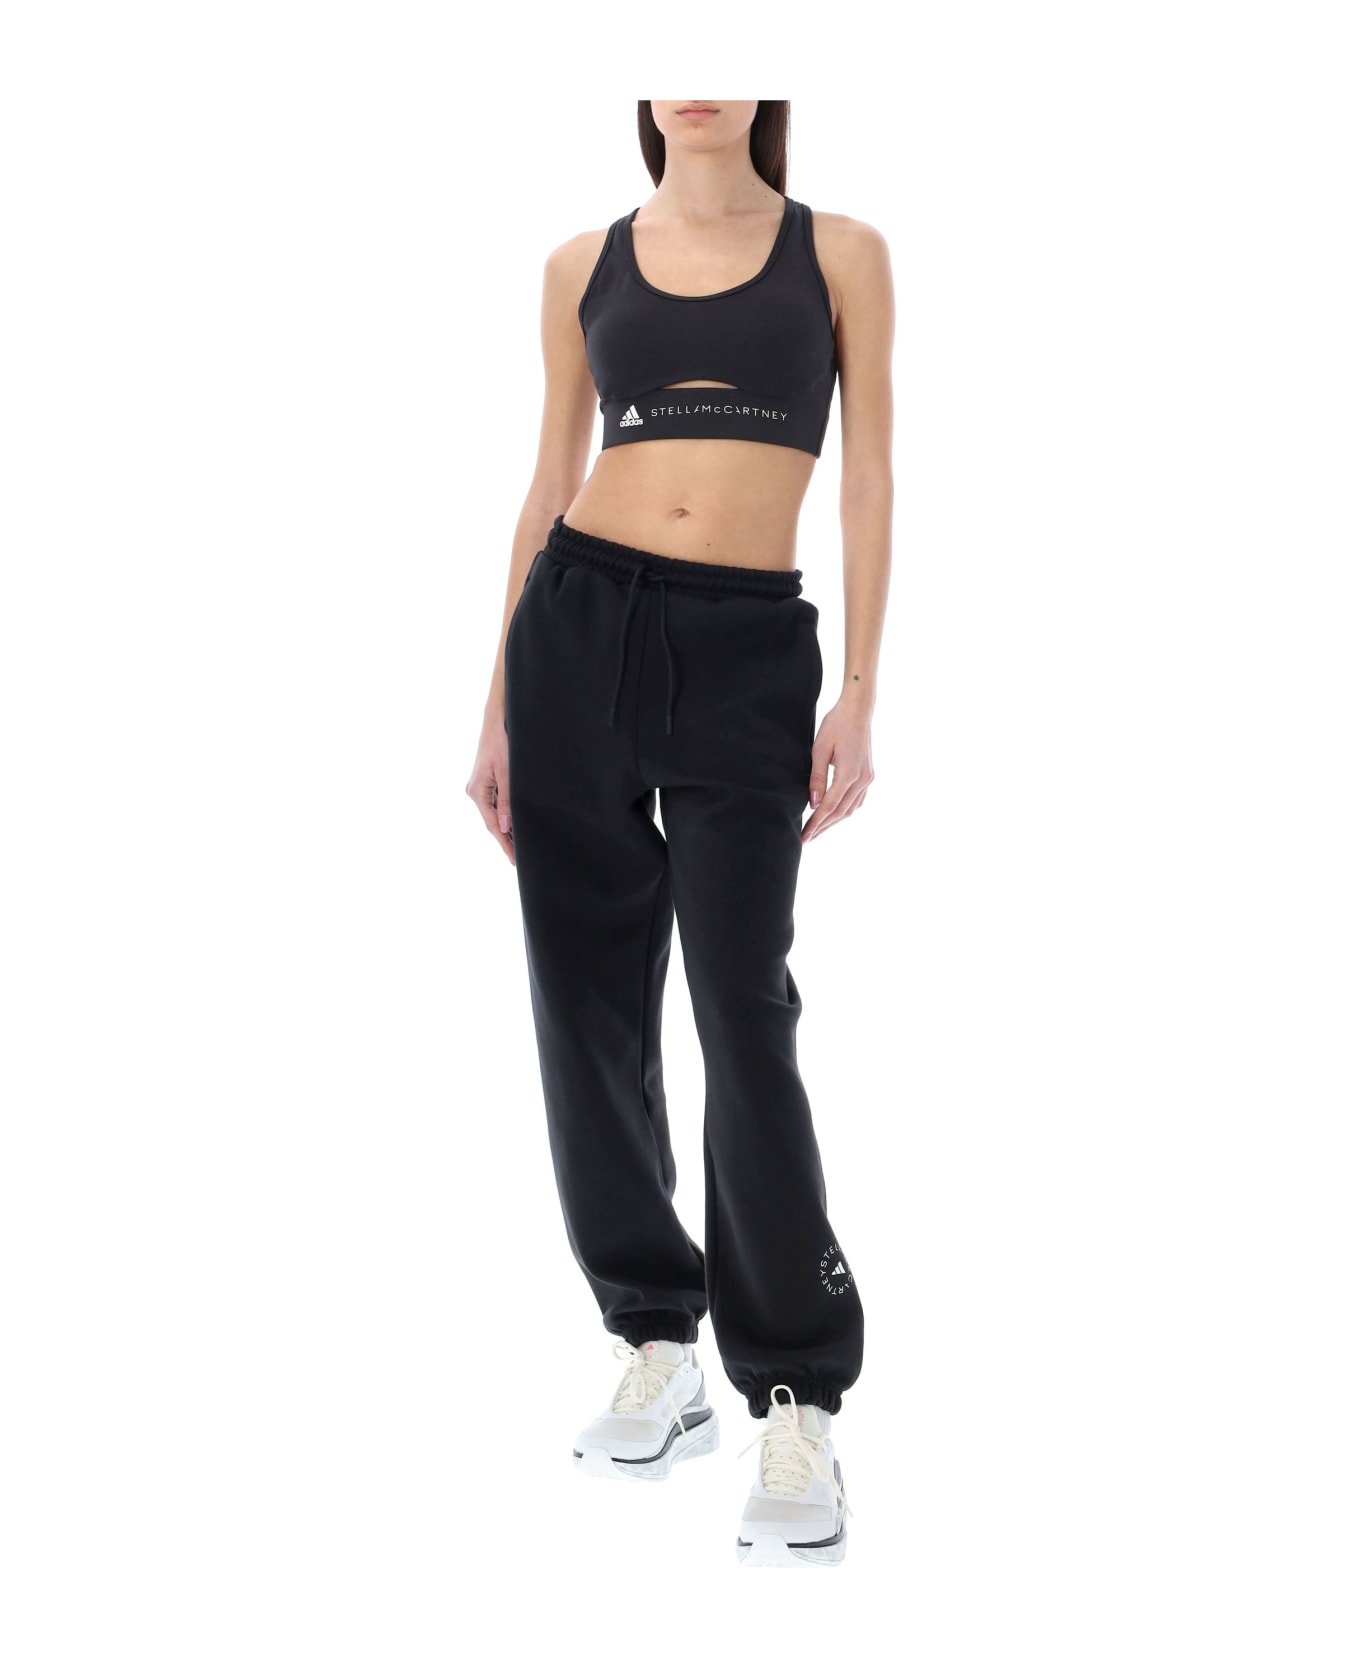 Adidas by Stella McCartney Truestrength Yoga Medium Support Sports Bra - Black ボトムス